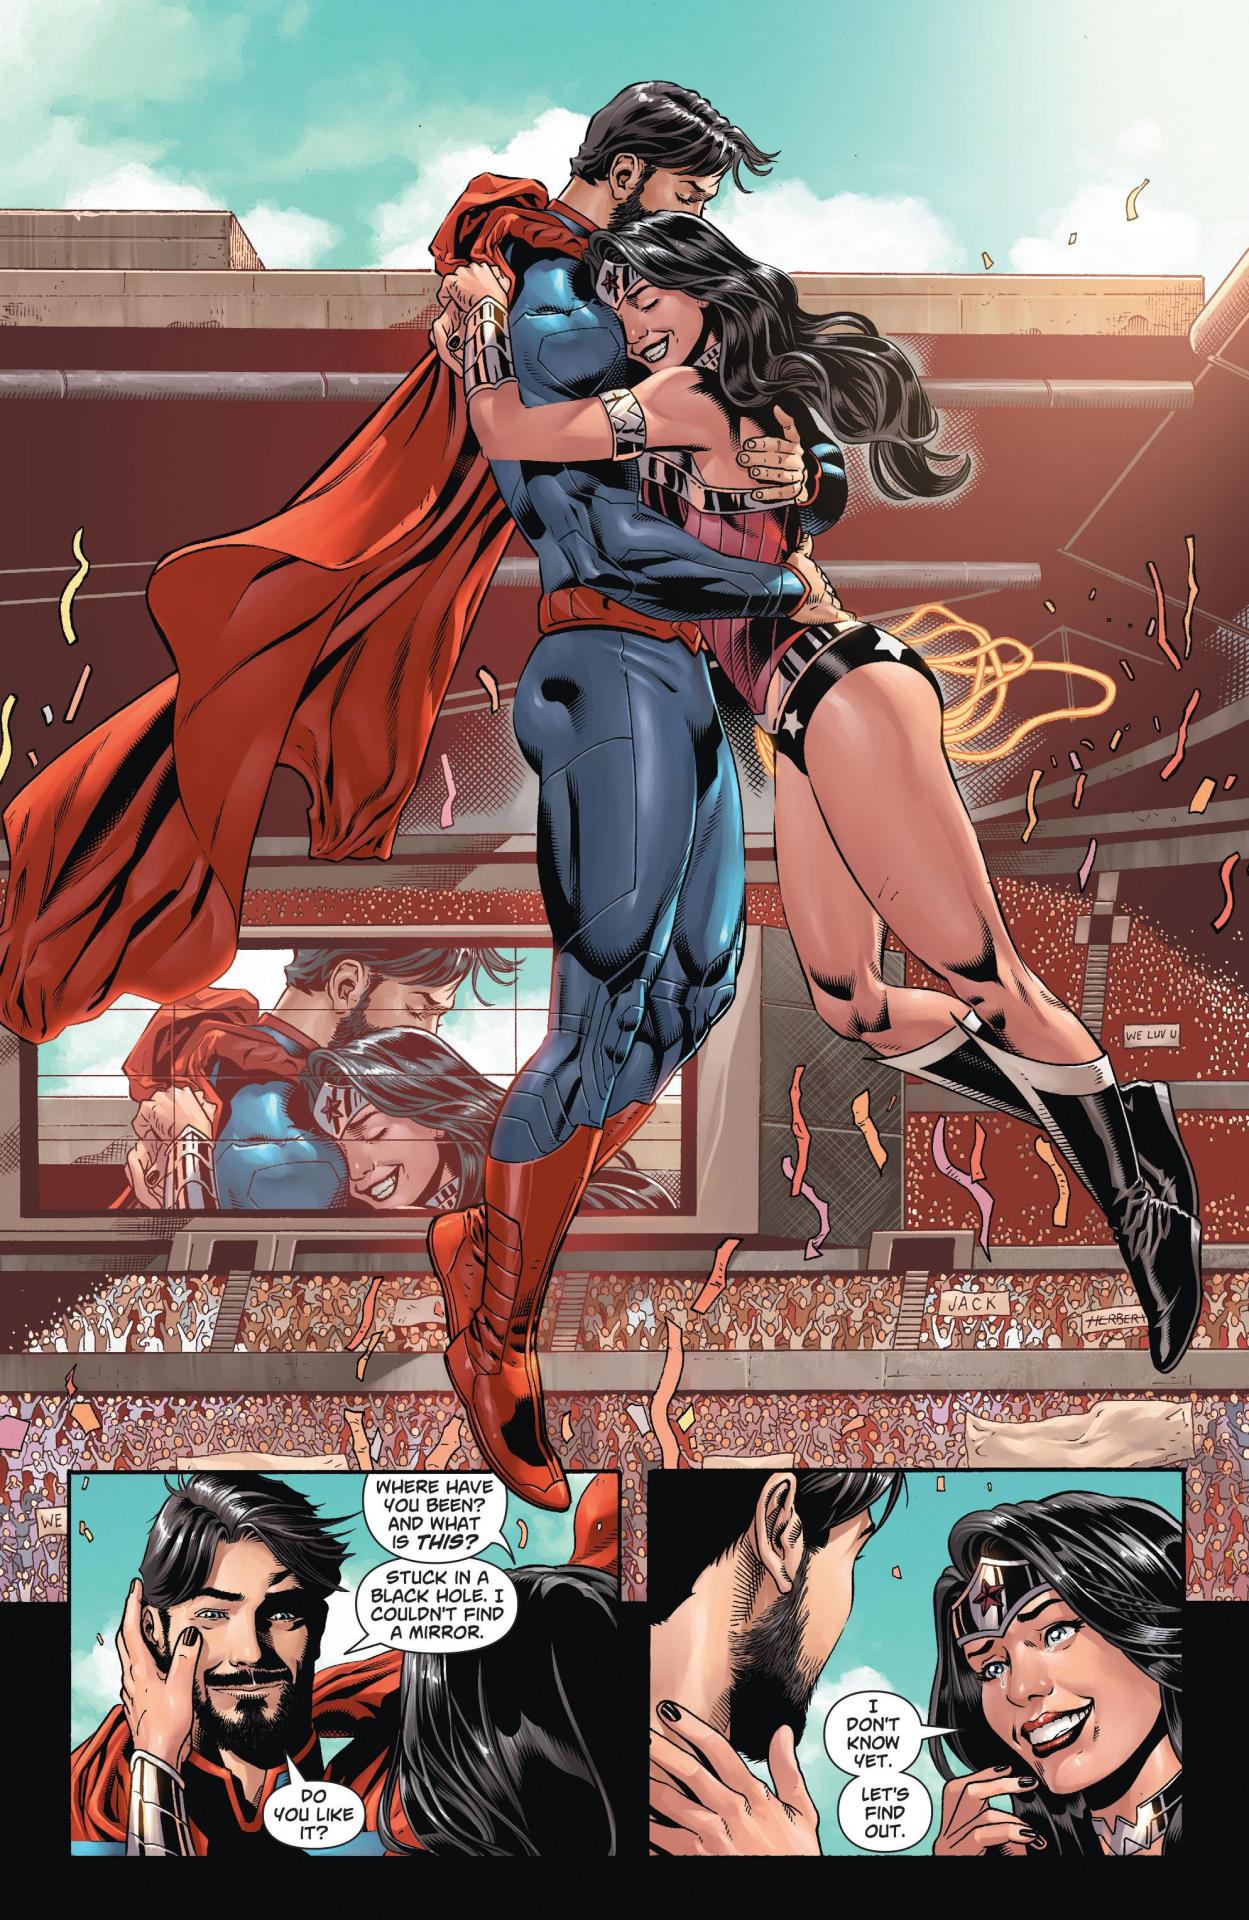 Woman relationship wonder superman It's time